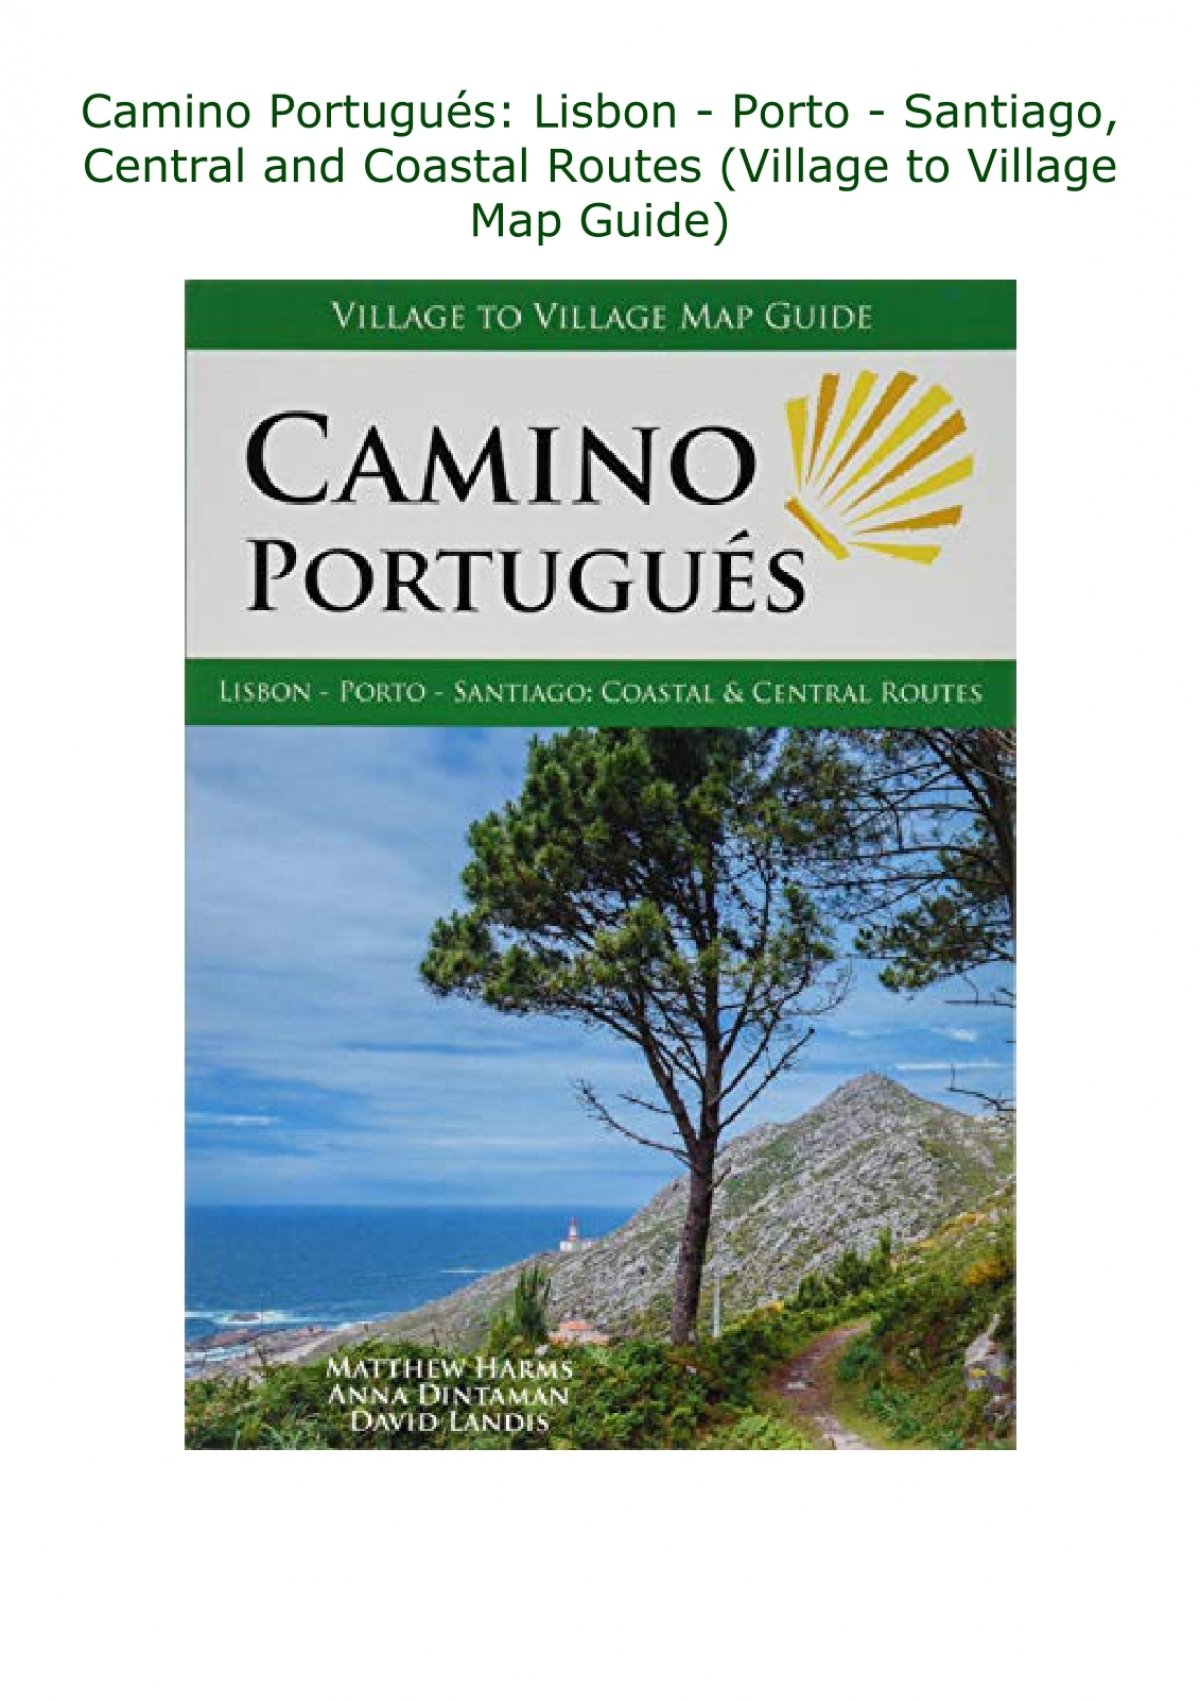 Download⚡️ Ebook ️ Camino Portugués Lisbon Porto Santiago Central And Coastal Routes 8377